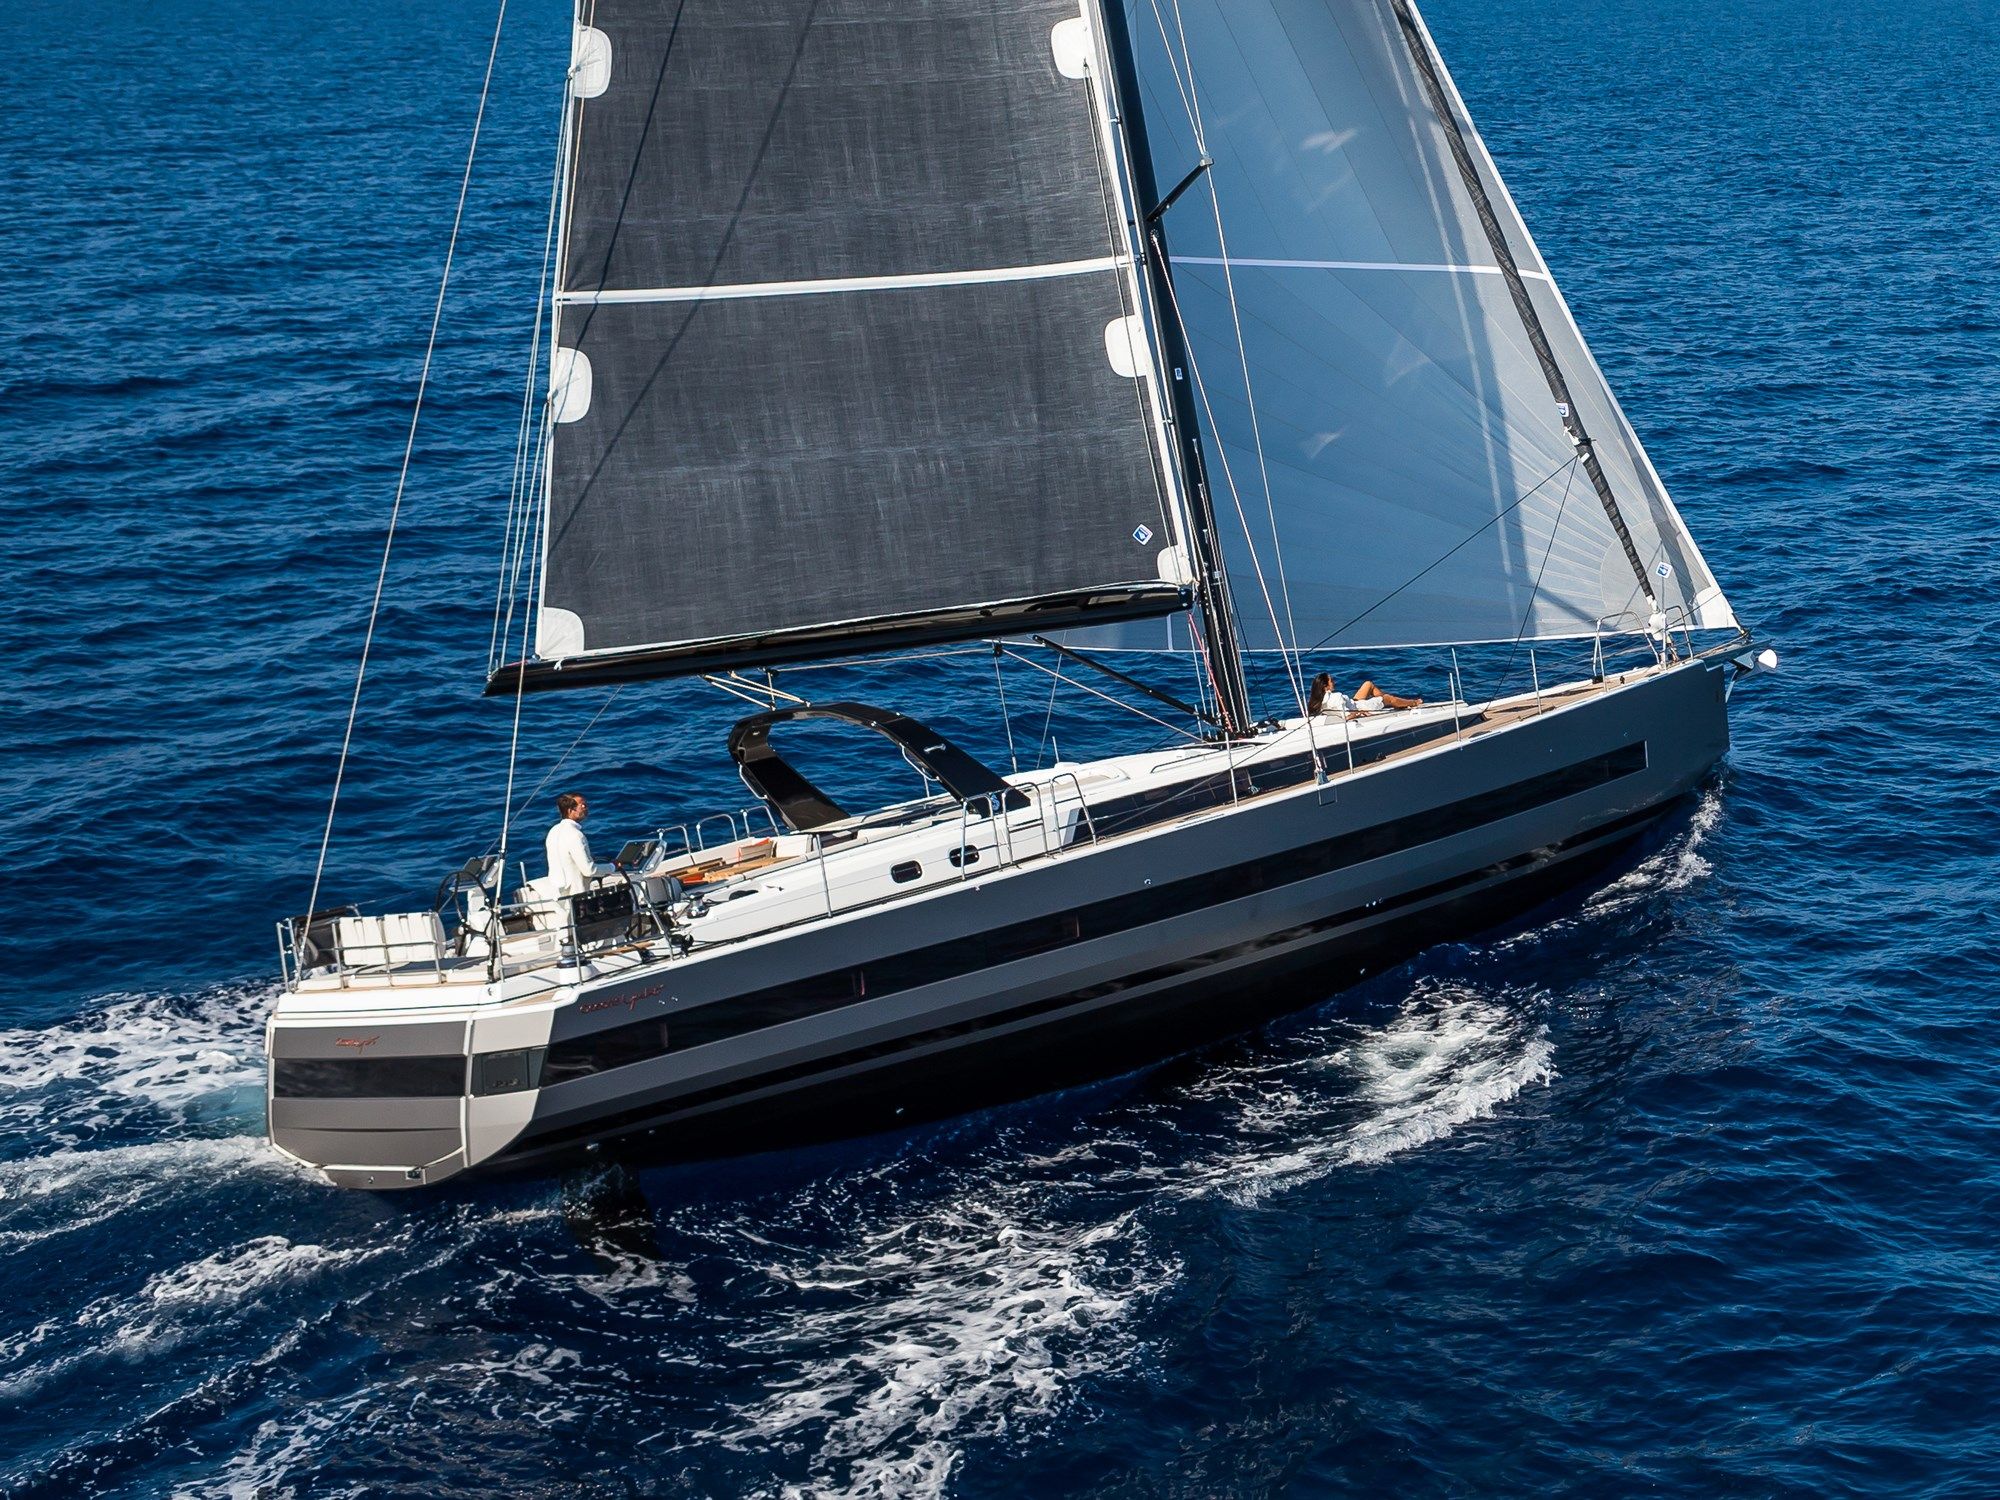 oceanis yacht 62 for sale